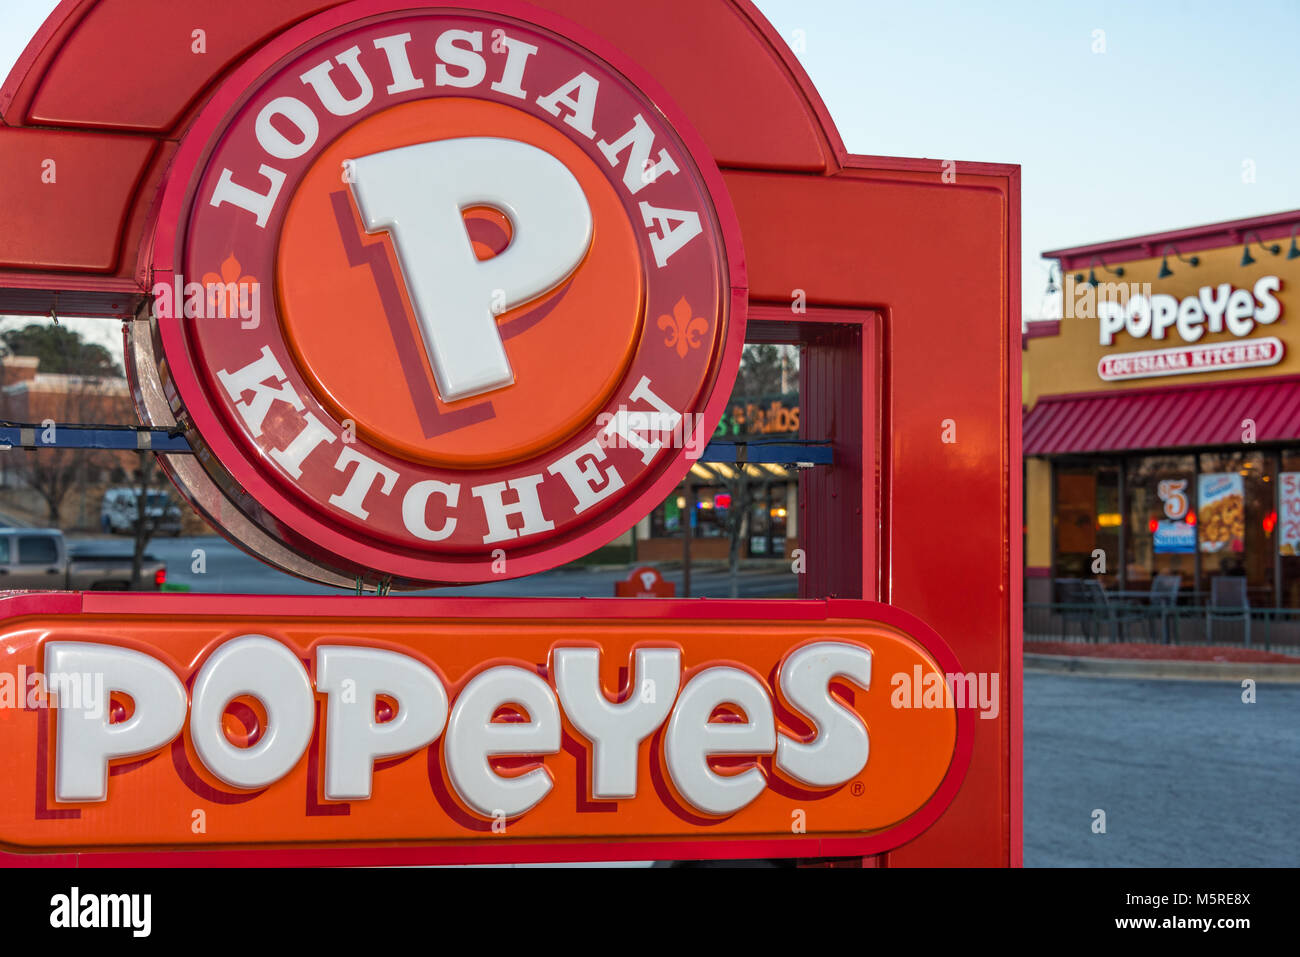 Popeyes Louisana Kitchen fast-food chicken chain restaurant in Metro Atlanta, Georgia. Stock Photo